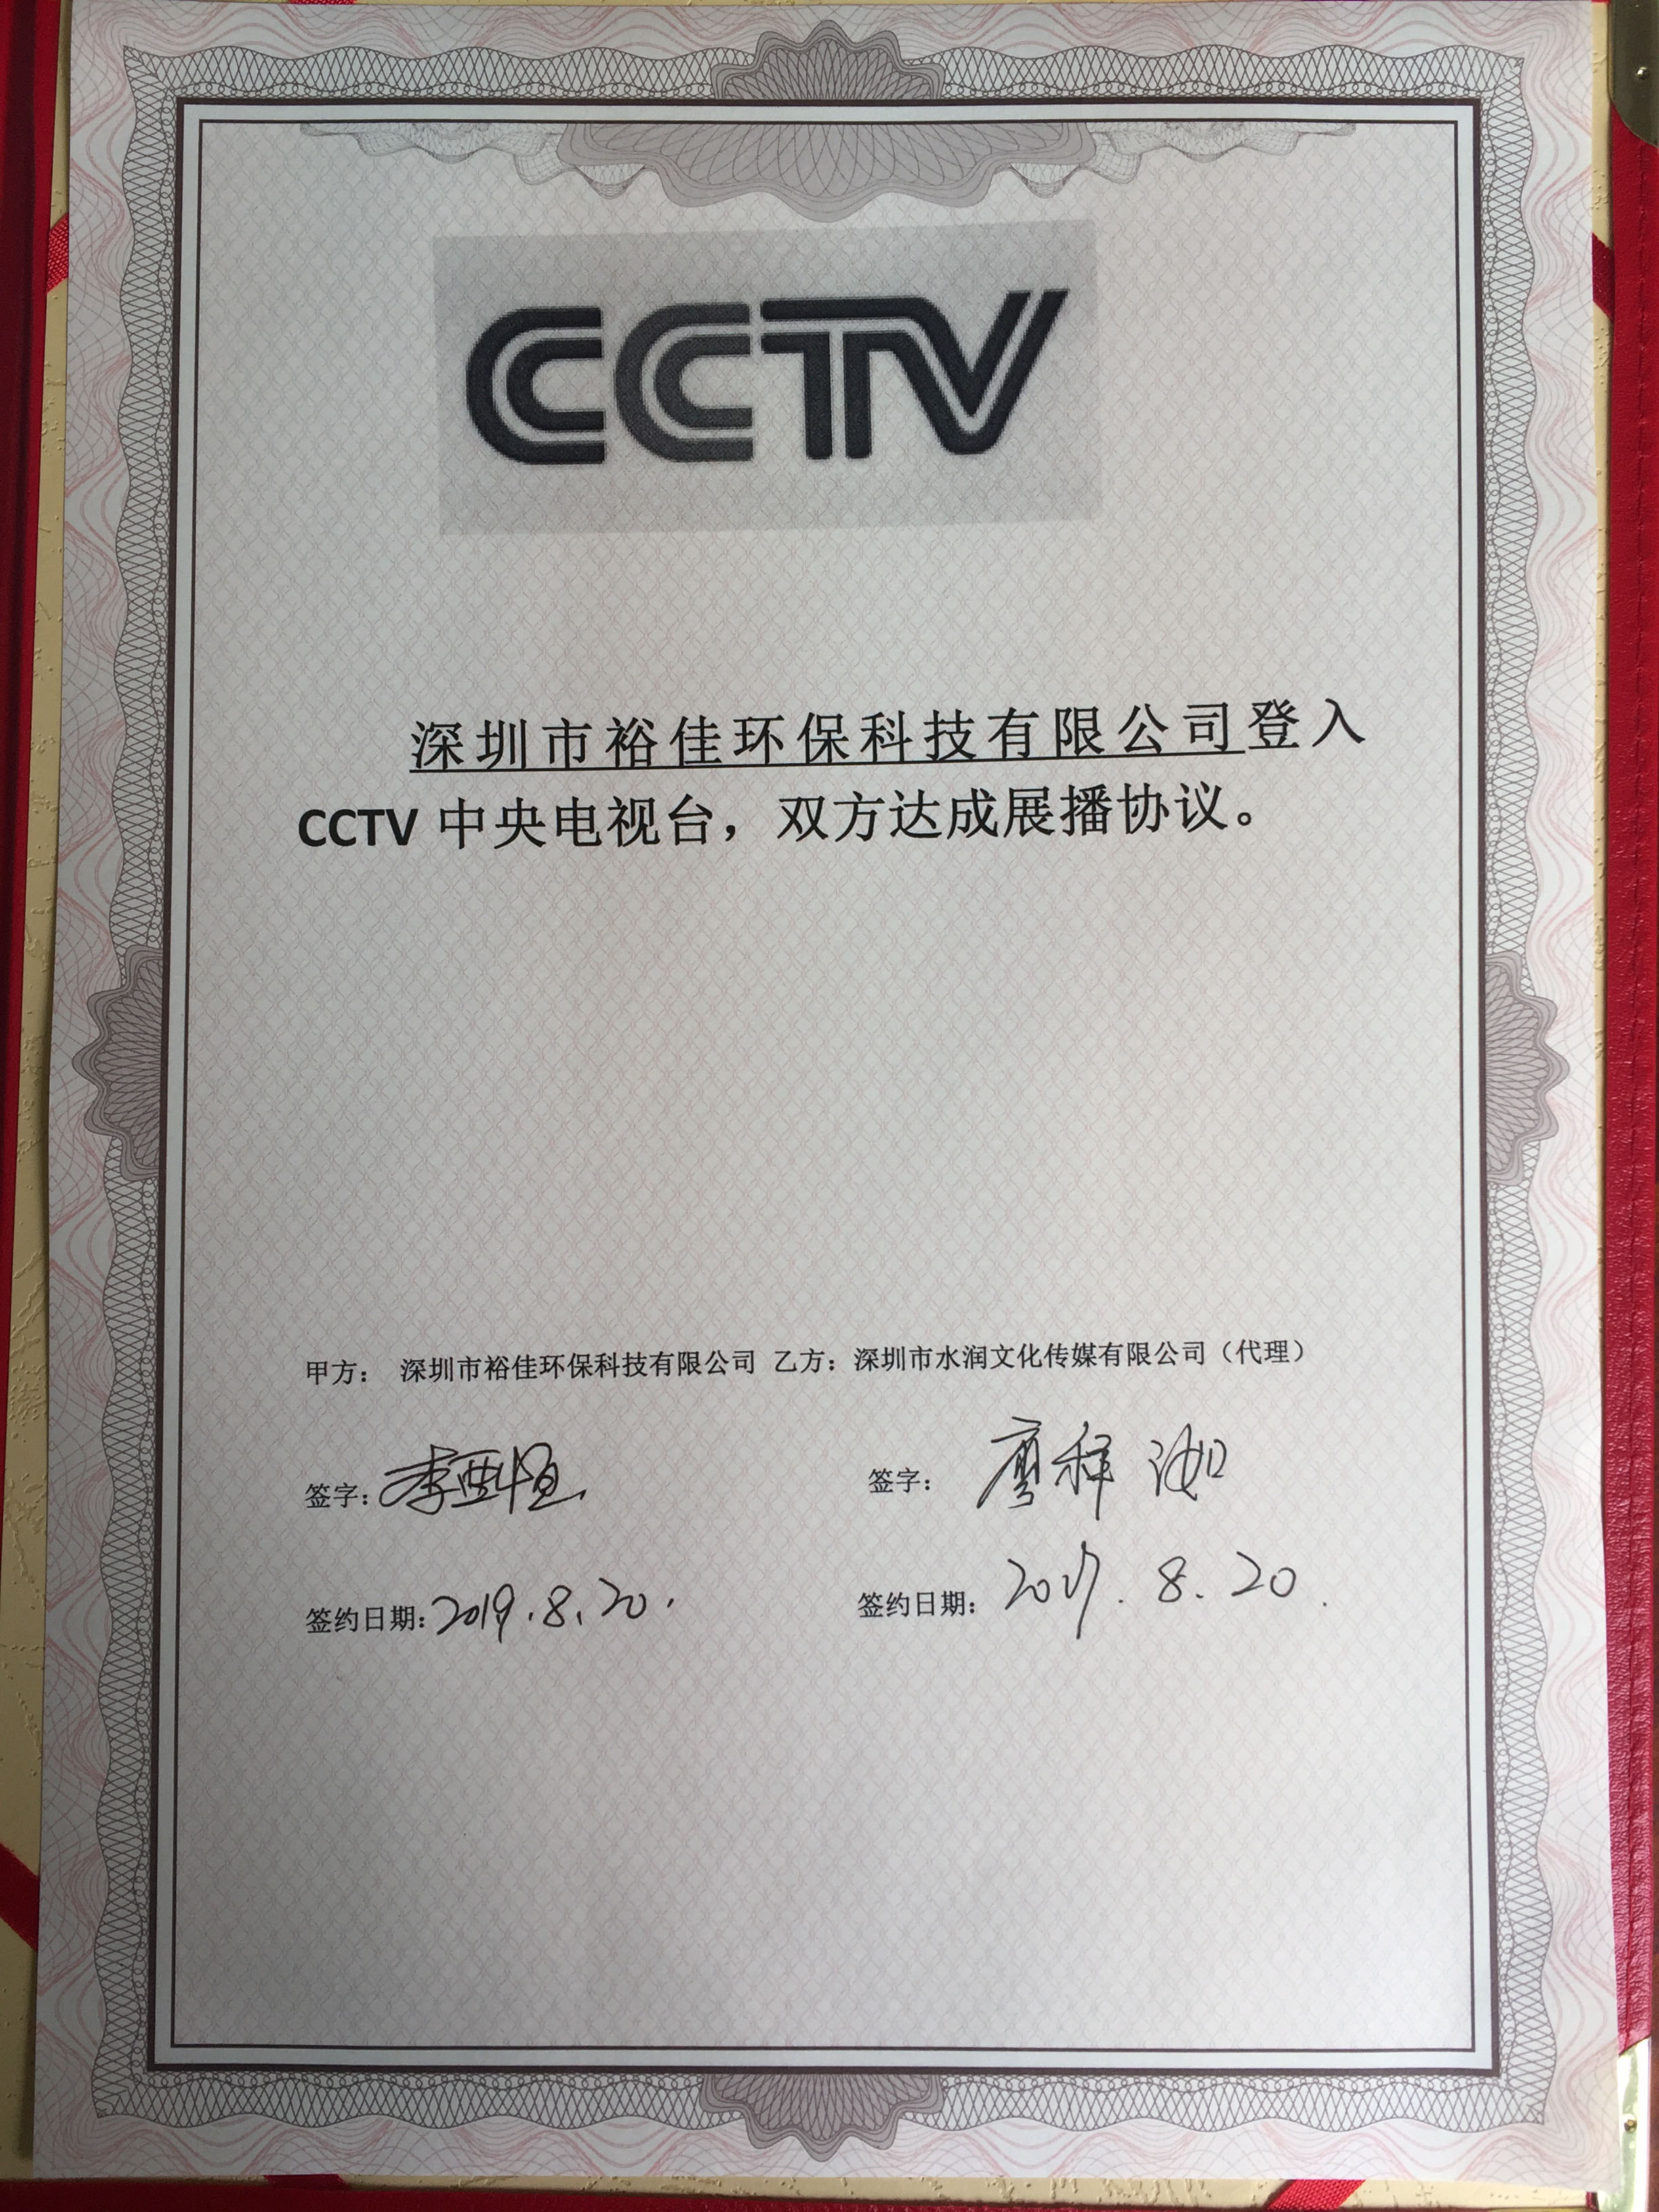 CCTV央视上榜品牌.jpg